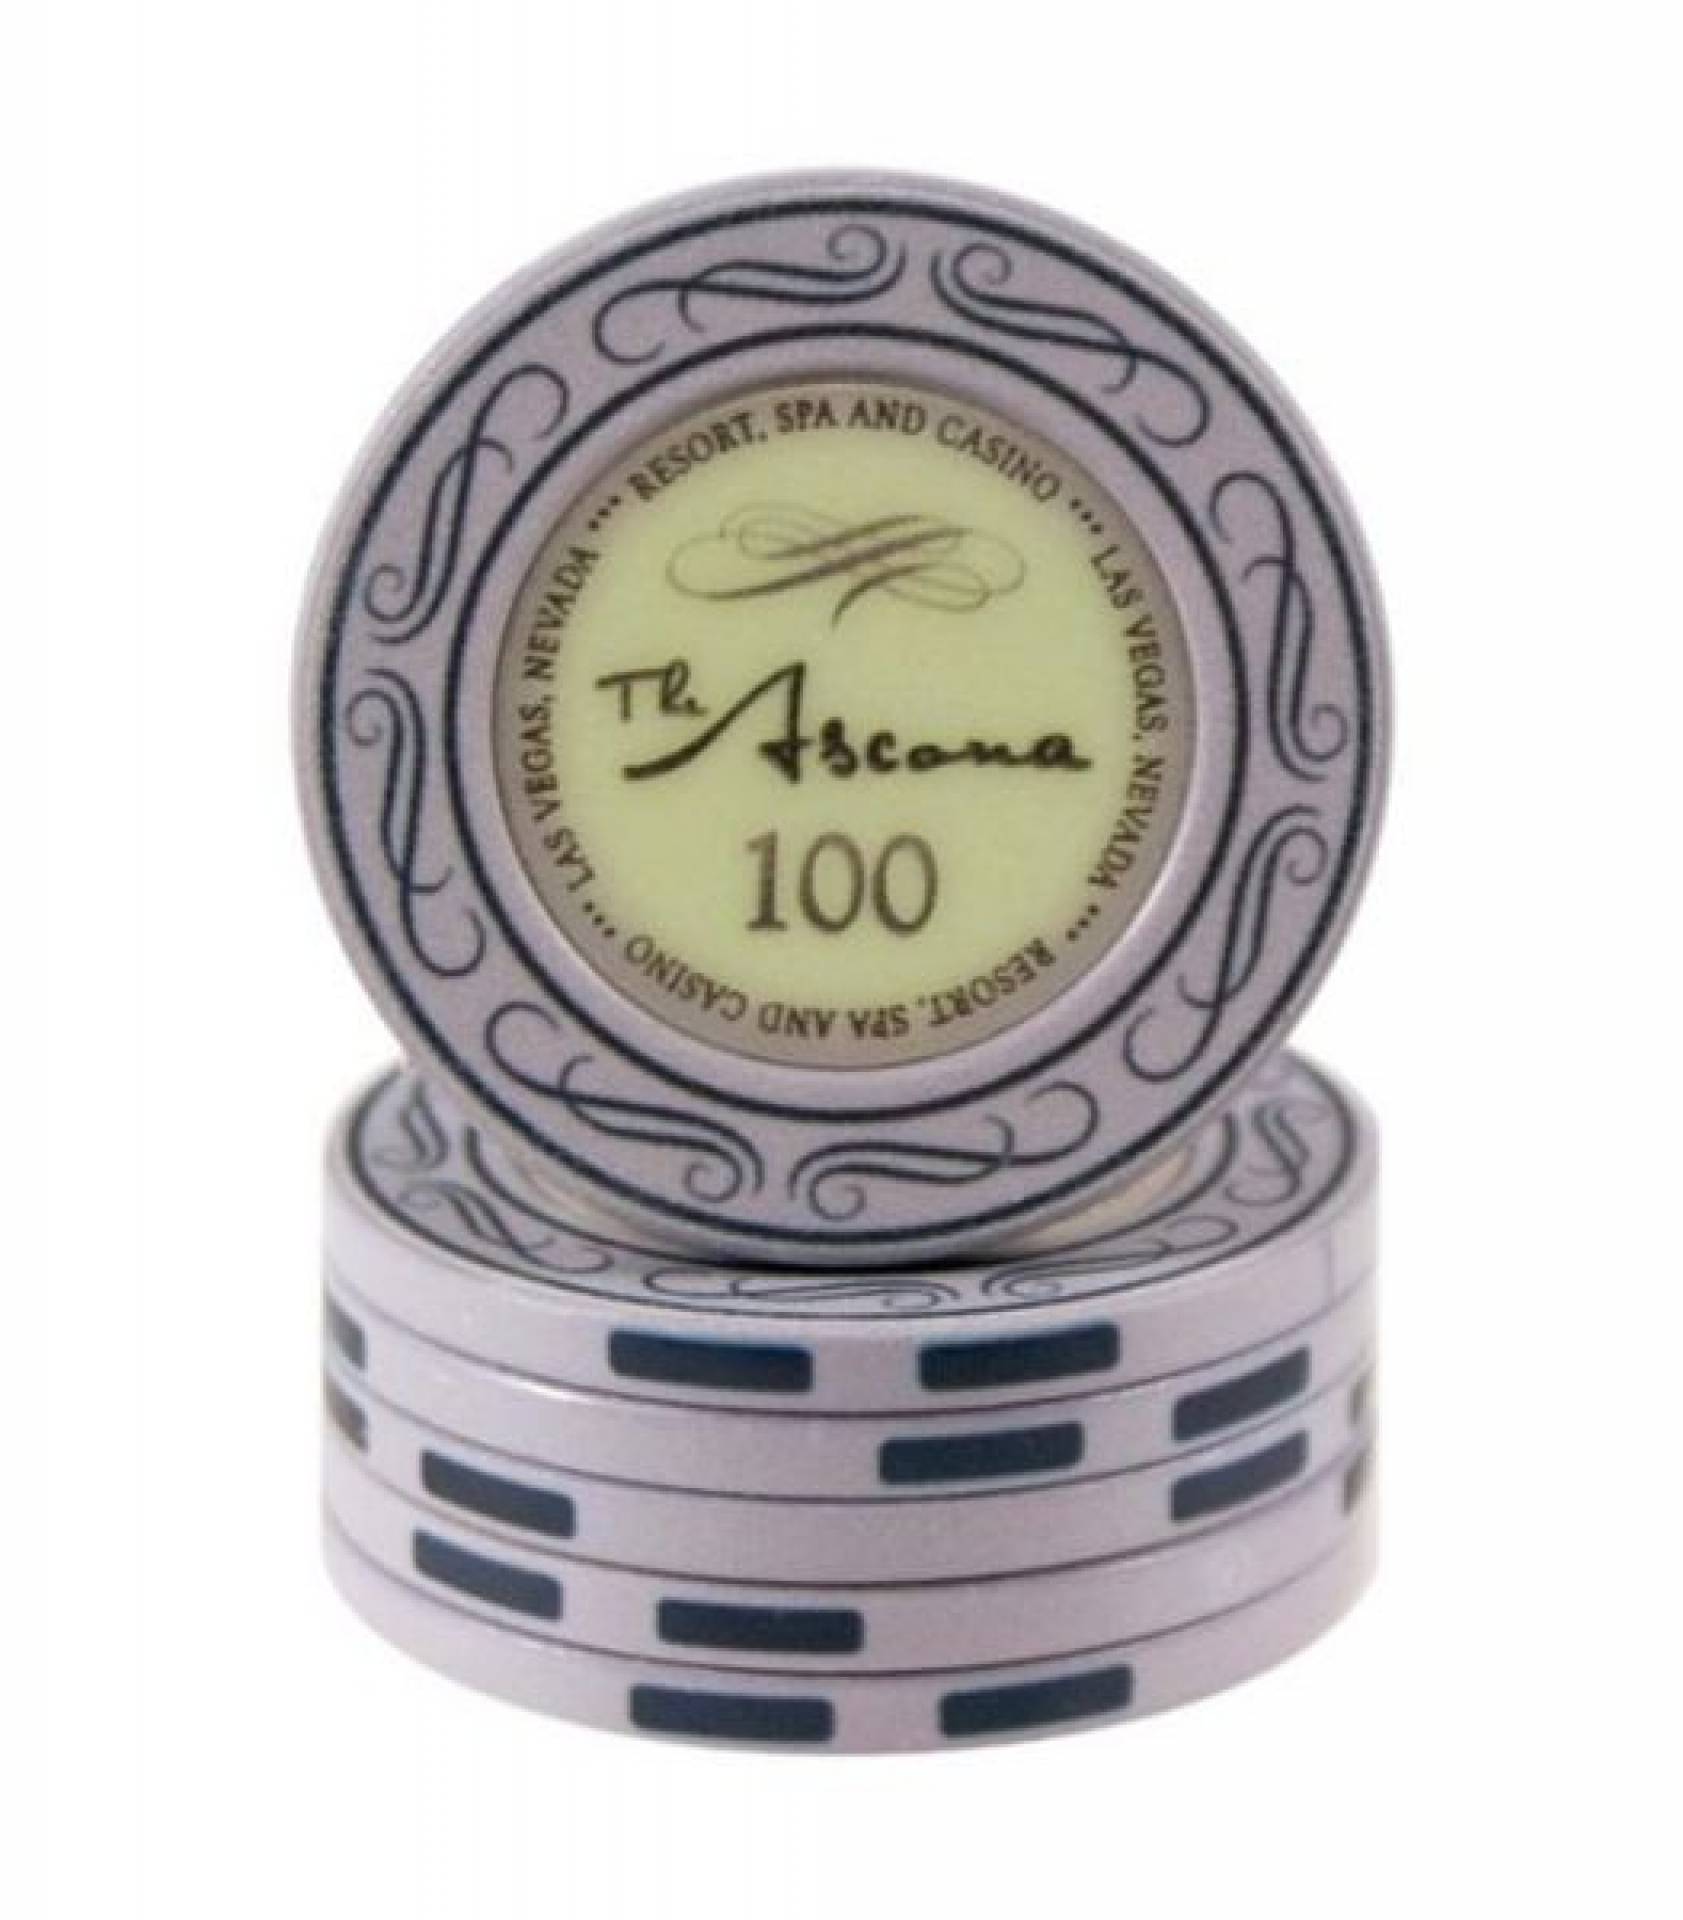 Poker chip The Ascona - hodnota 100